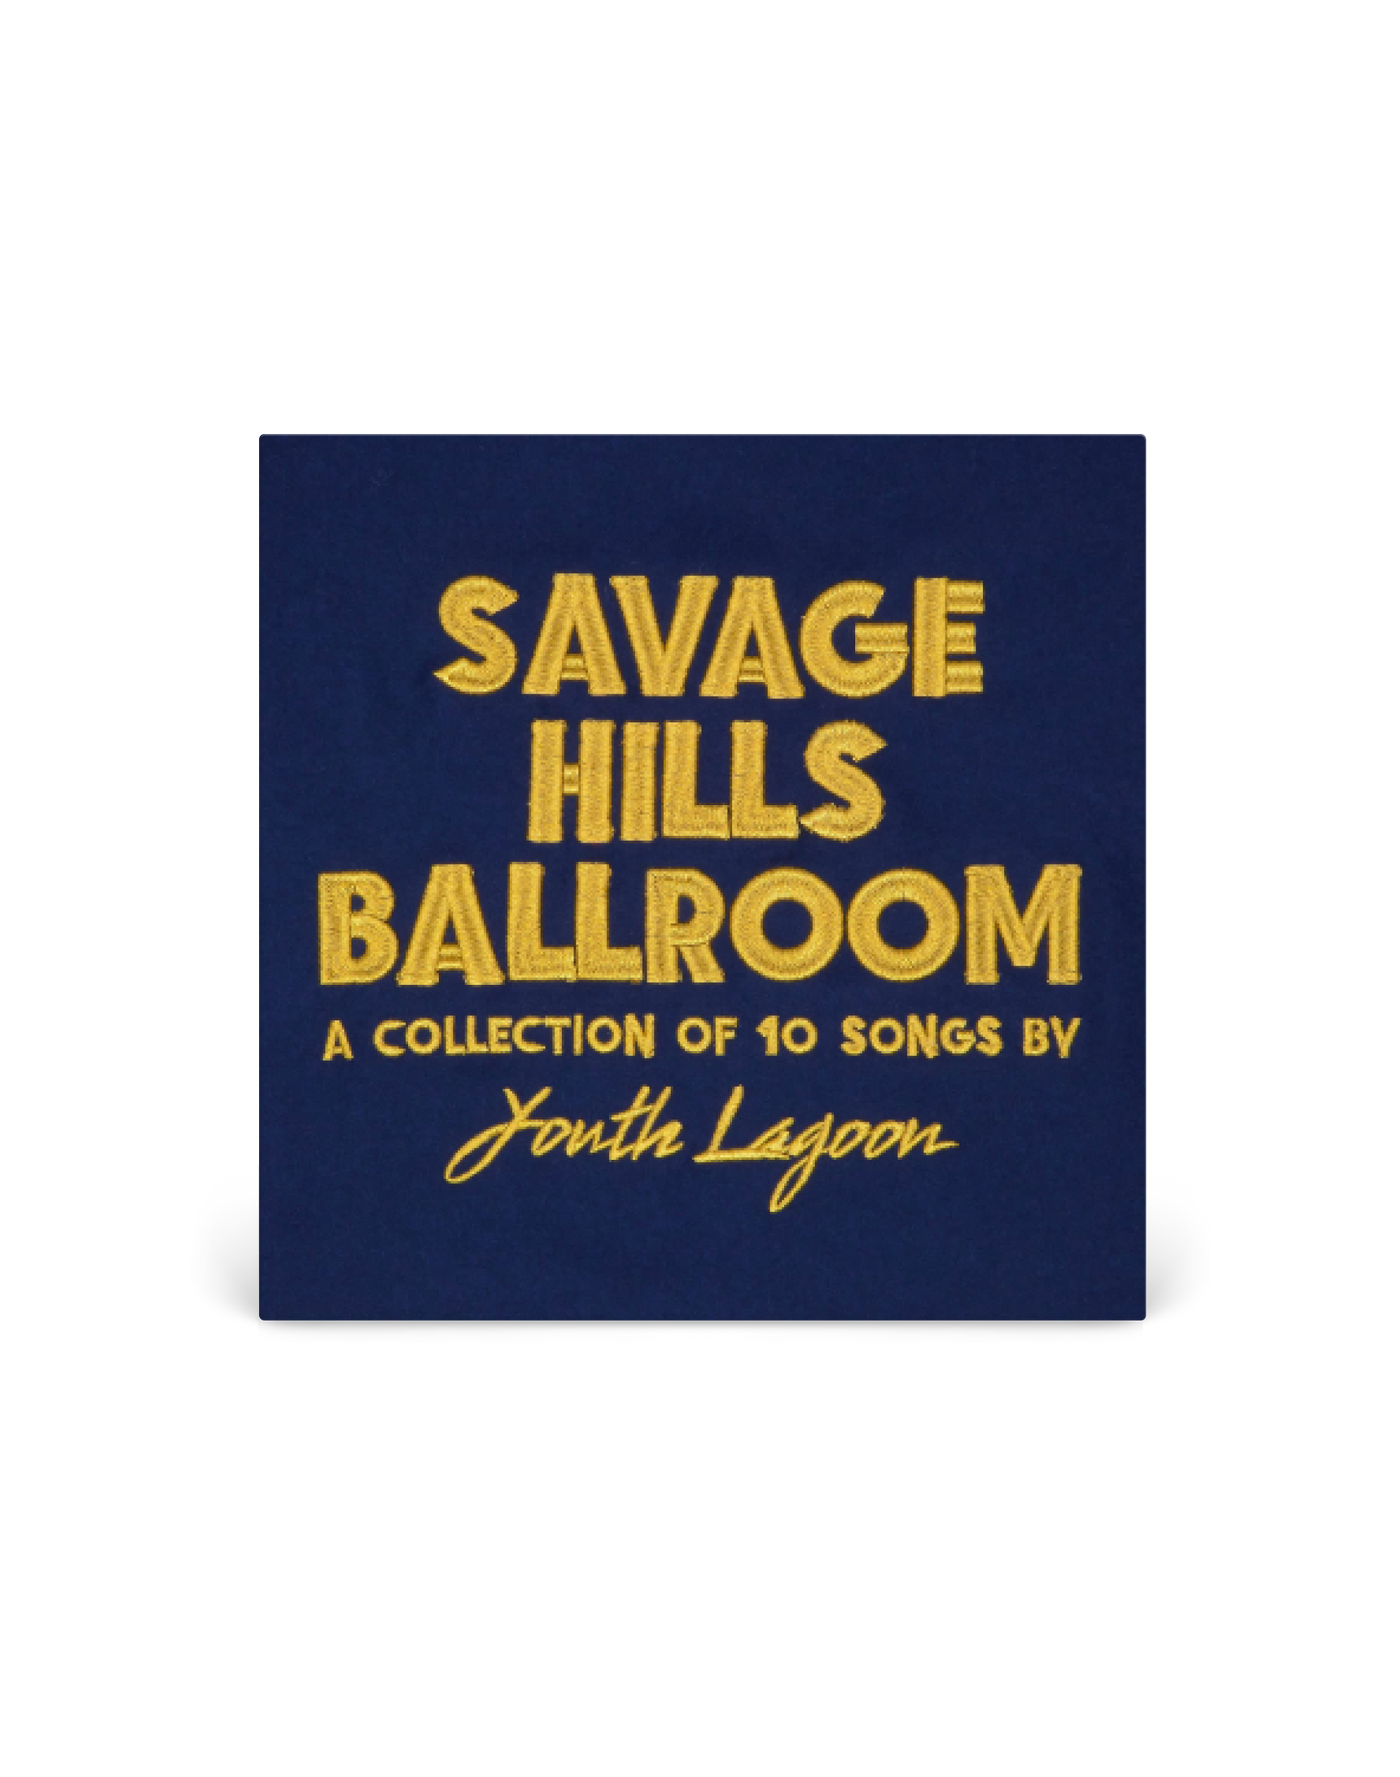 CD - Youth Lagoon Savage Hills Ballroom